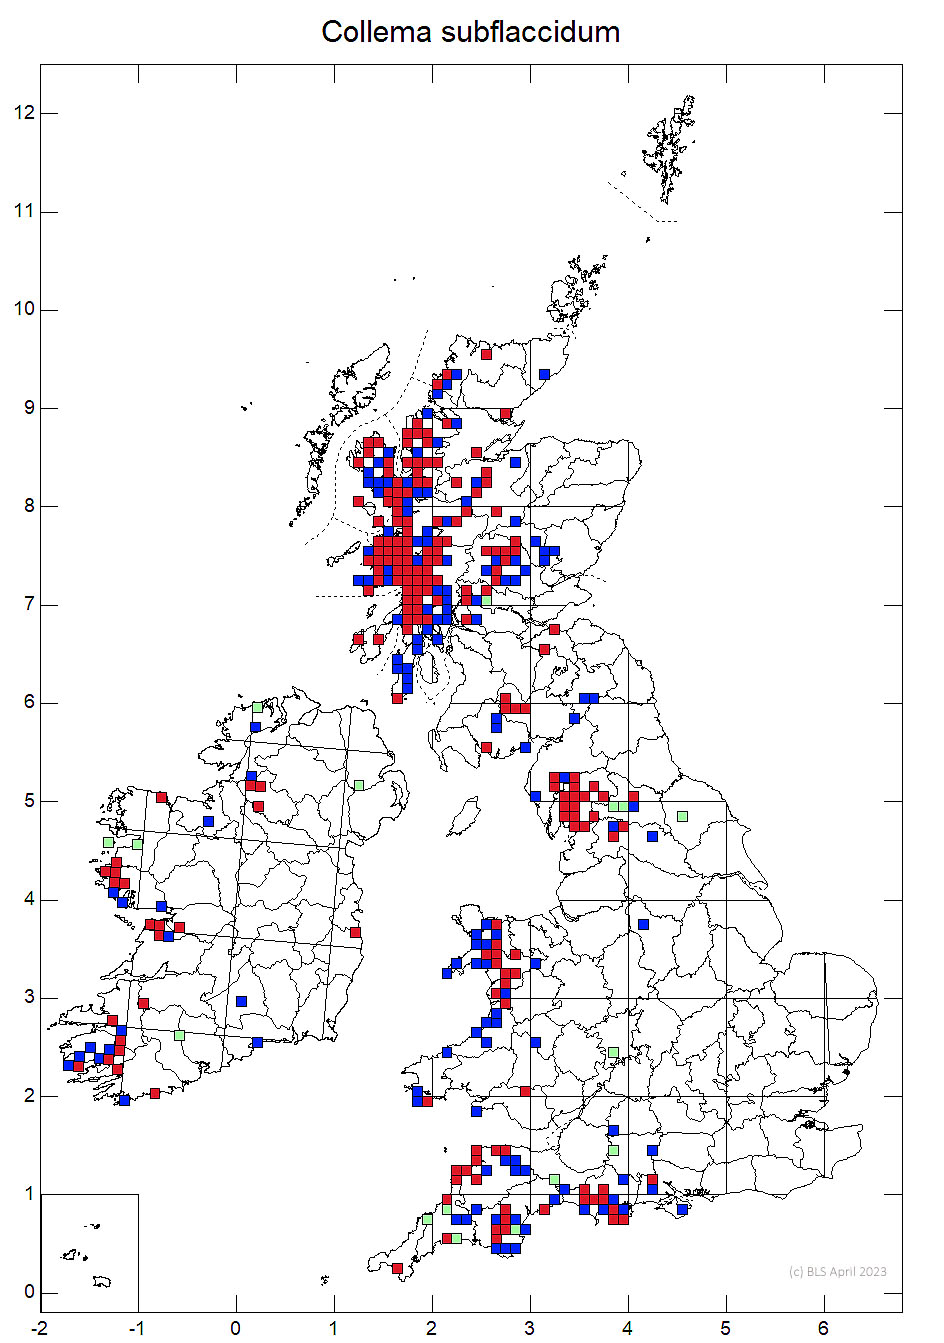 Collema subflaccidum 10km sq distribution map